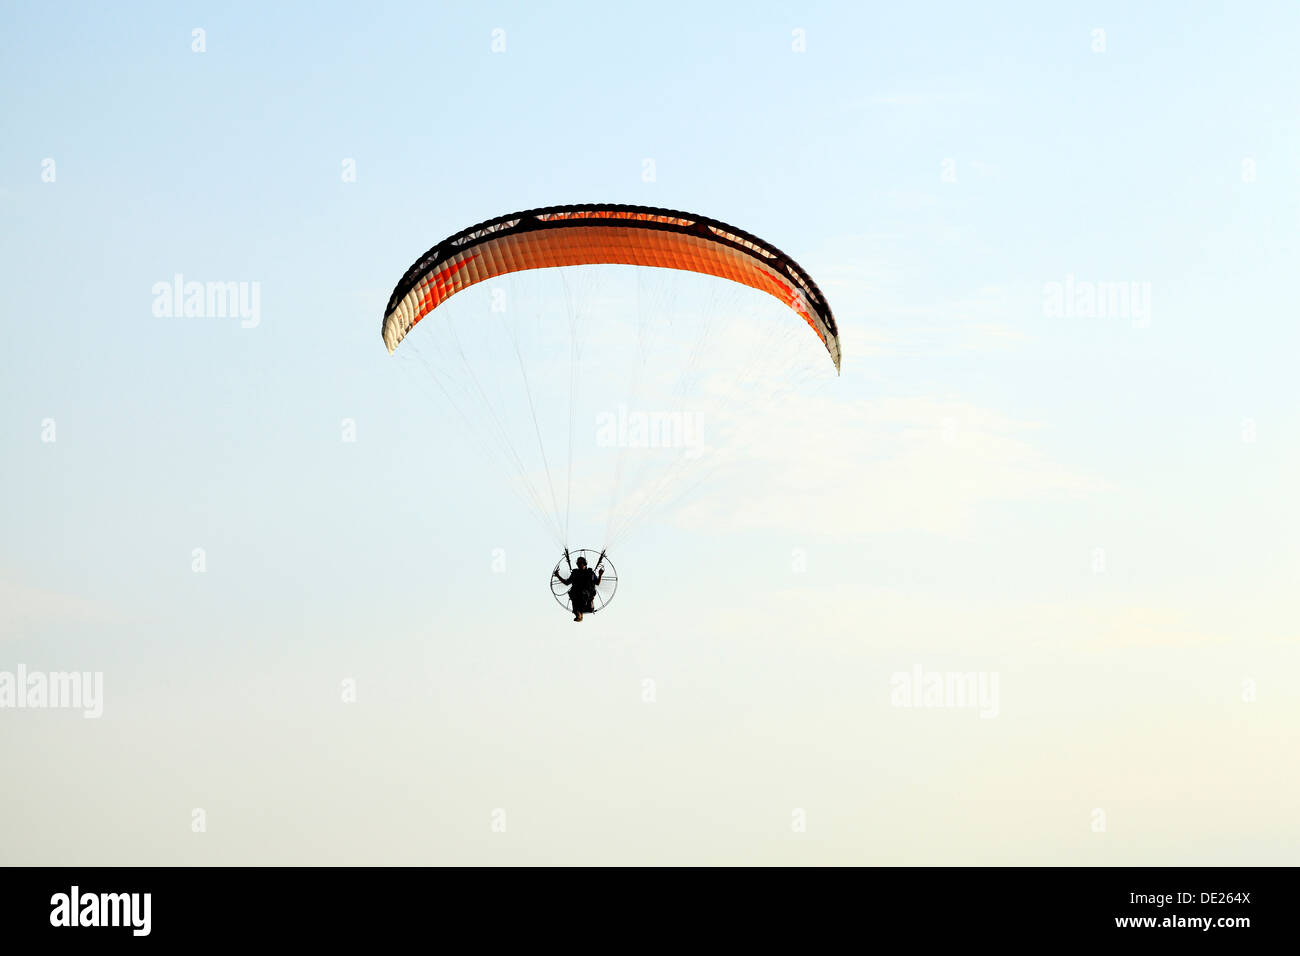 Ala Delta Parapente hombre volar paracaídas actividad recreativa UK planeadores. Foto de stock